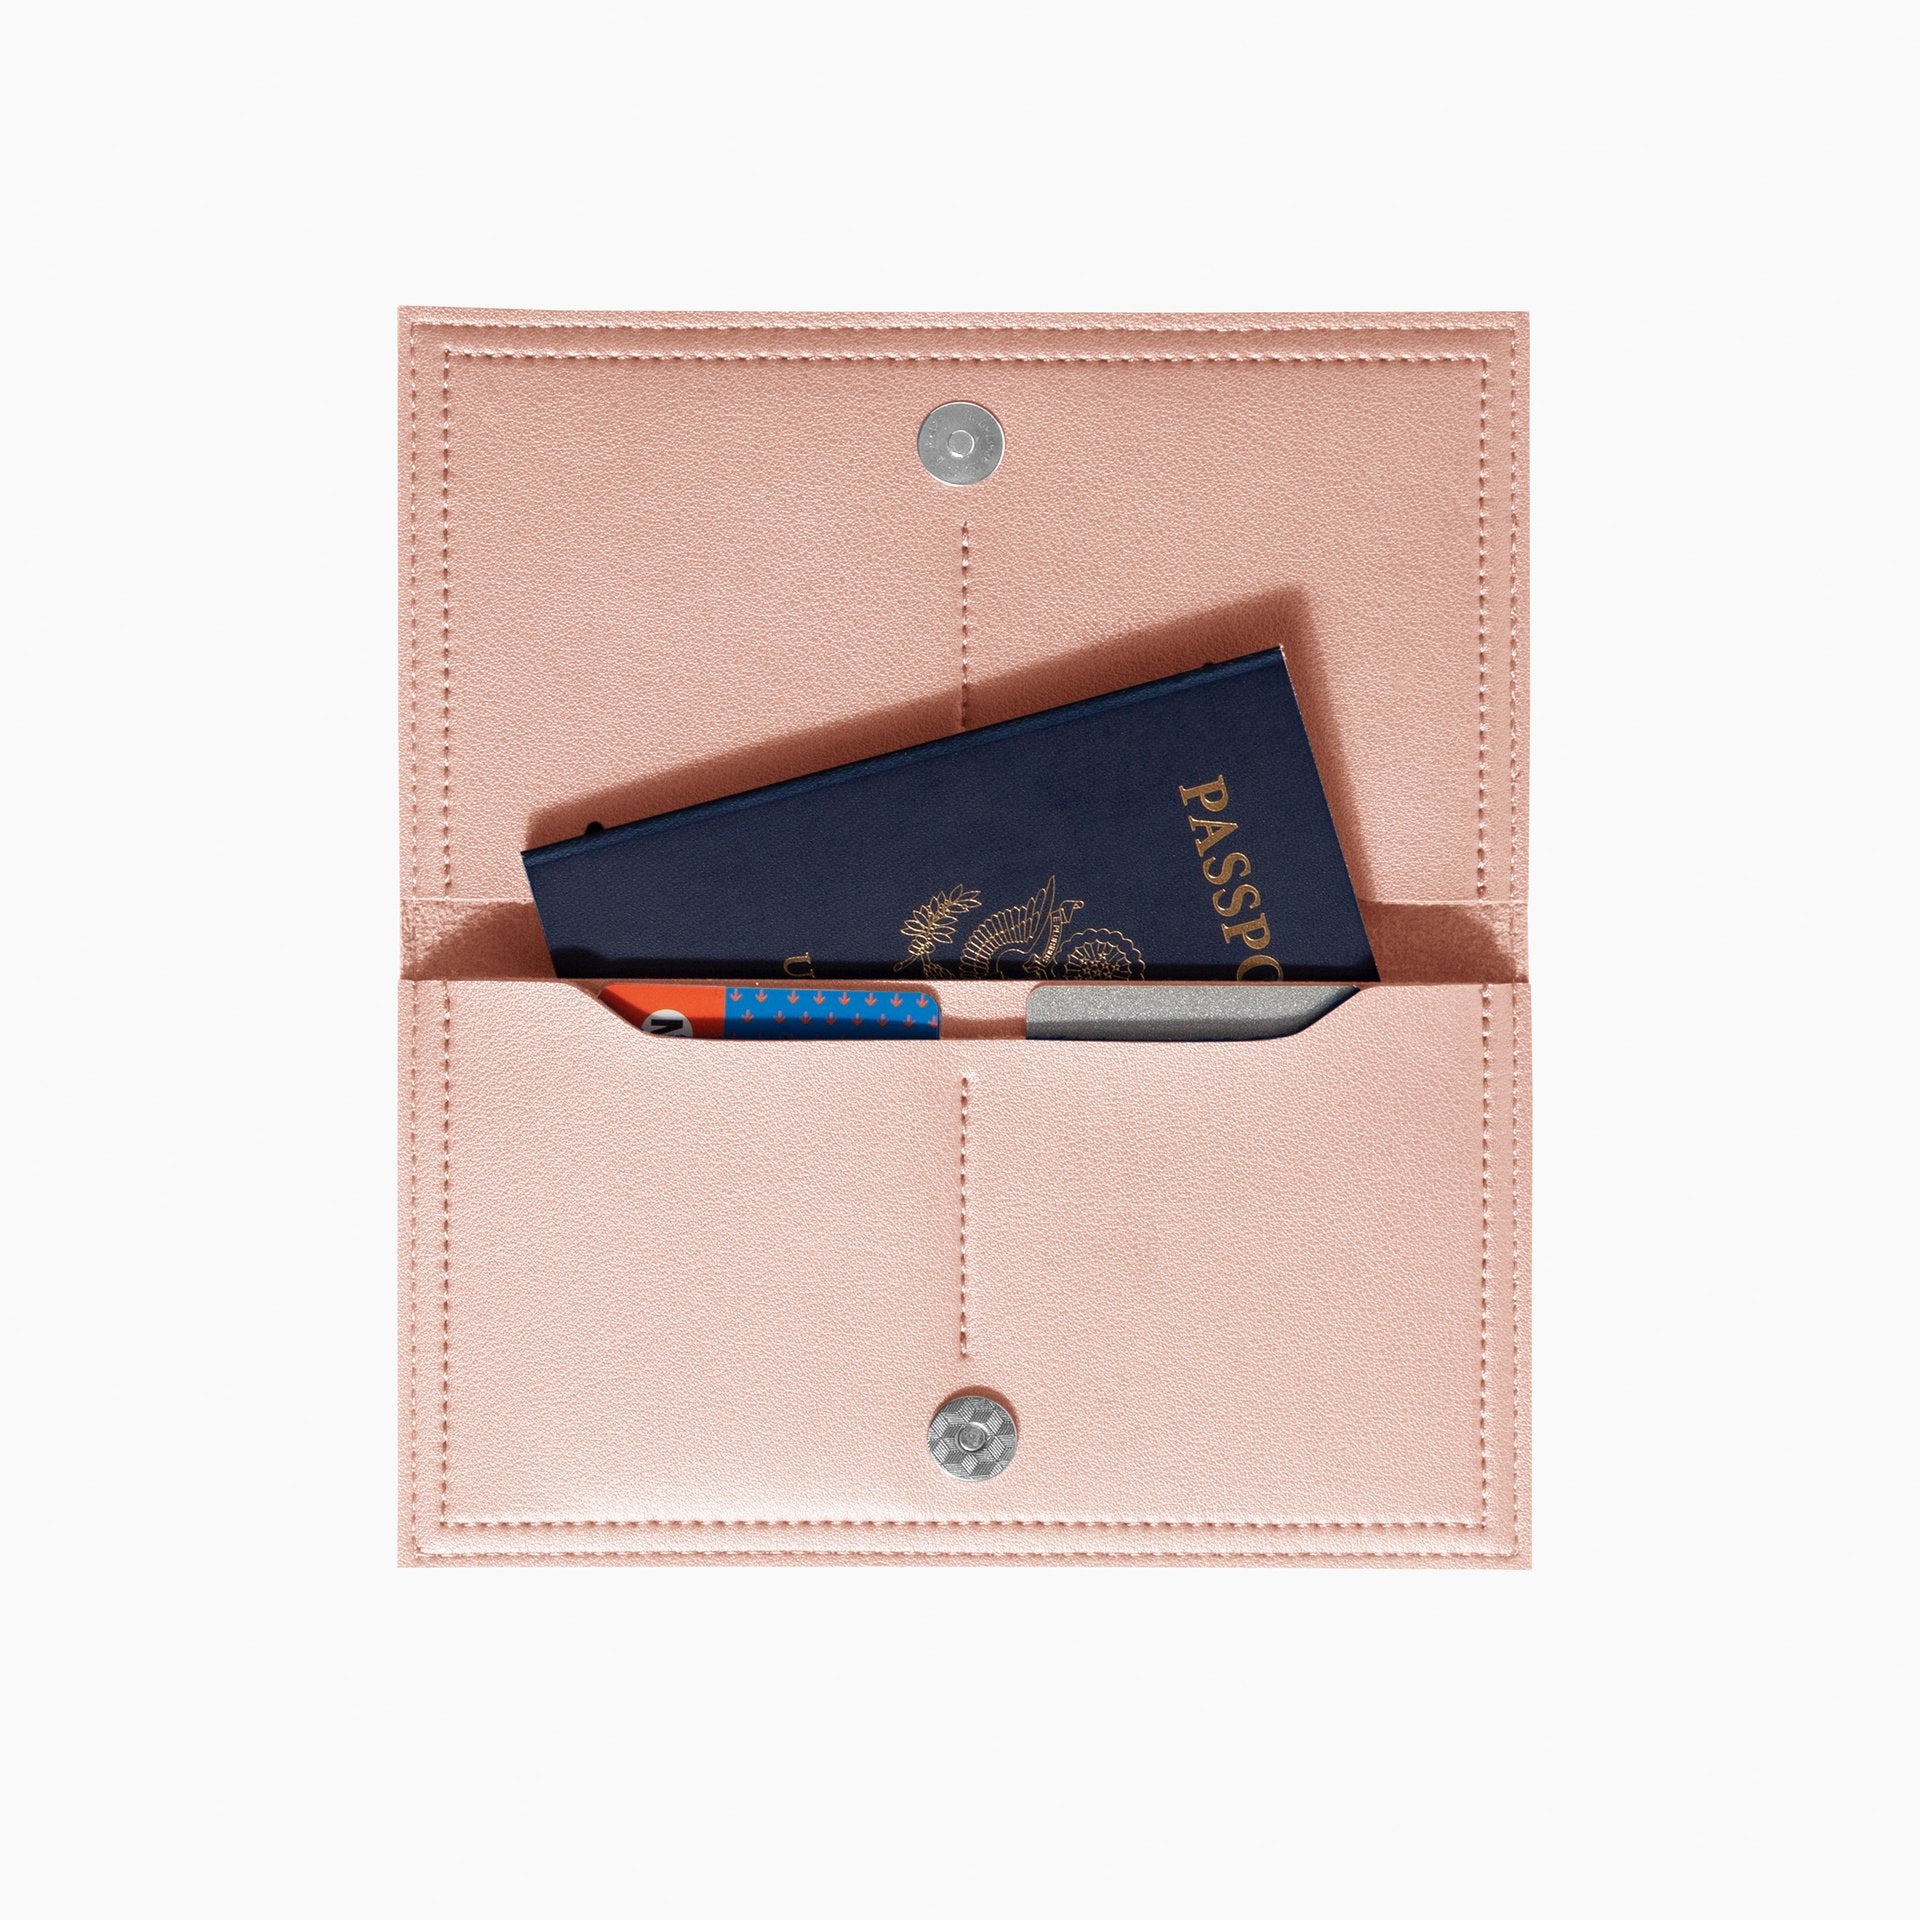 Minimalist Wallet in Blush